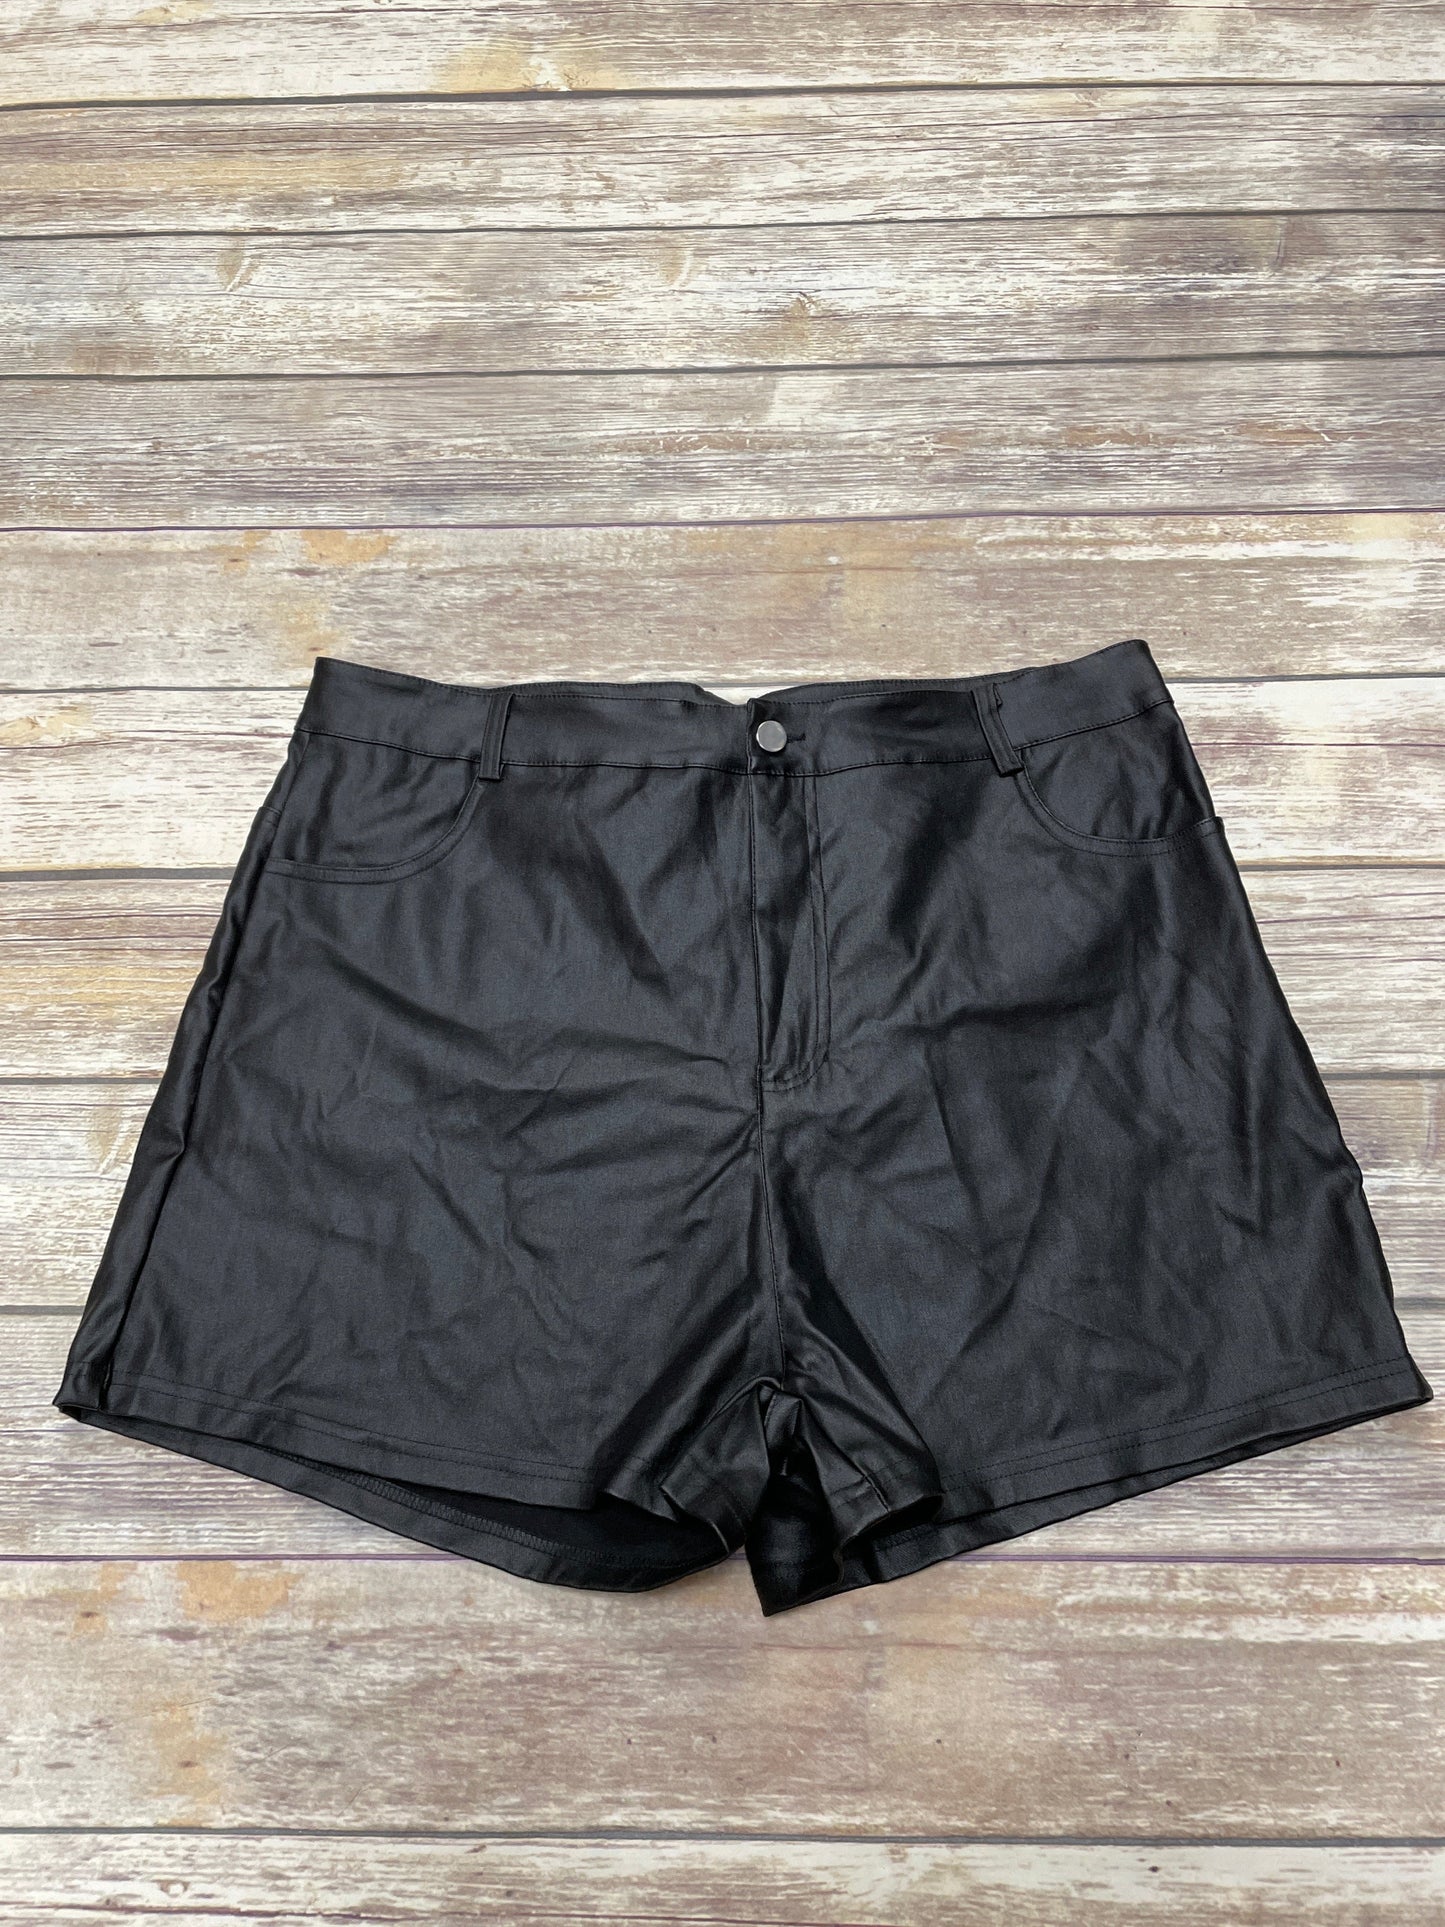 Black Shorts Cmf, Size 3x